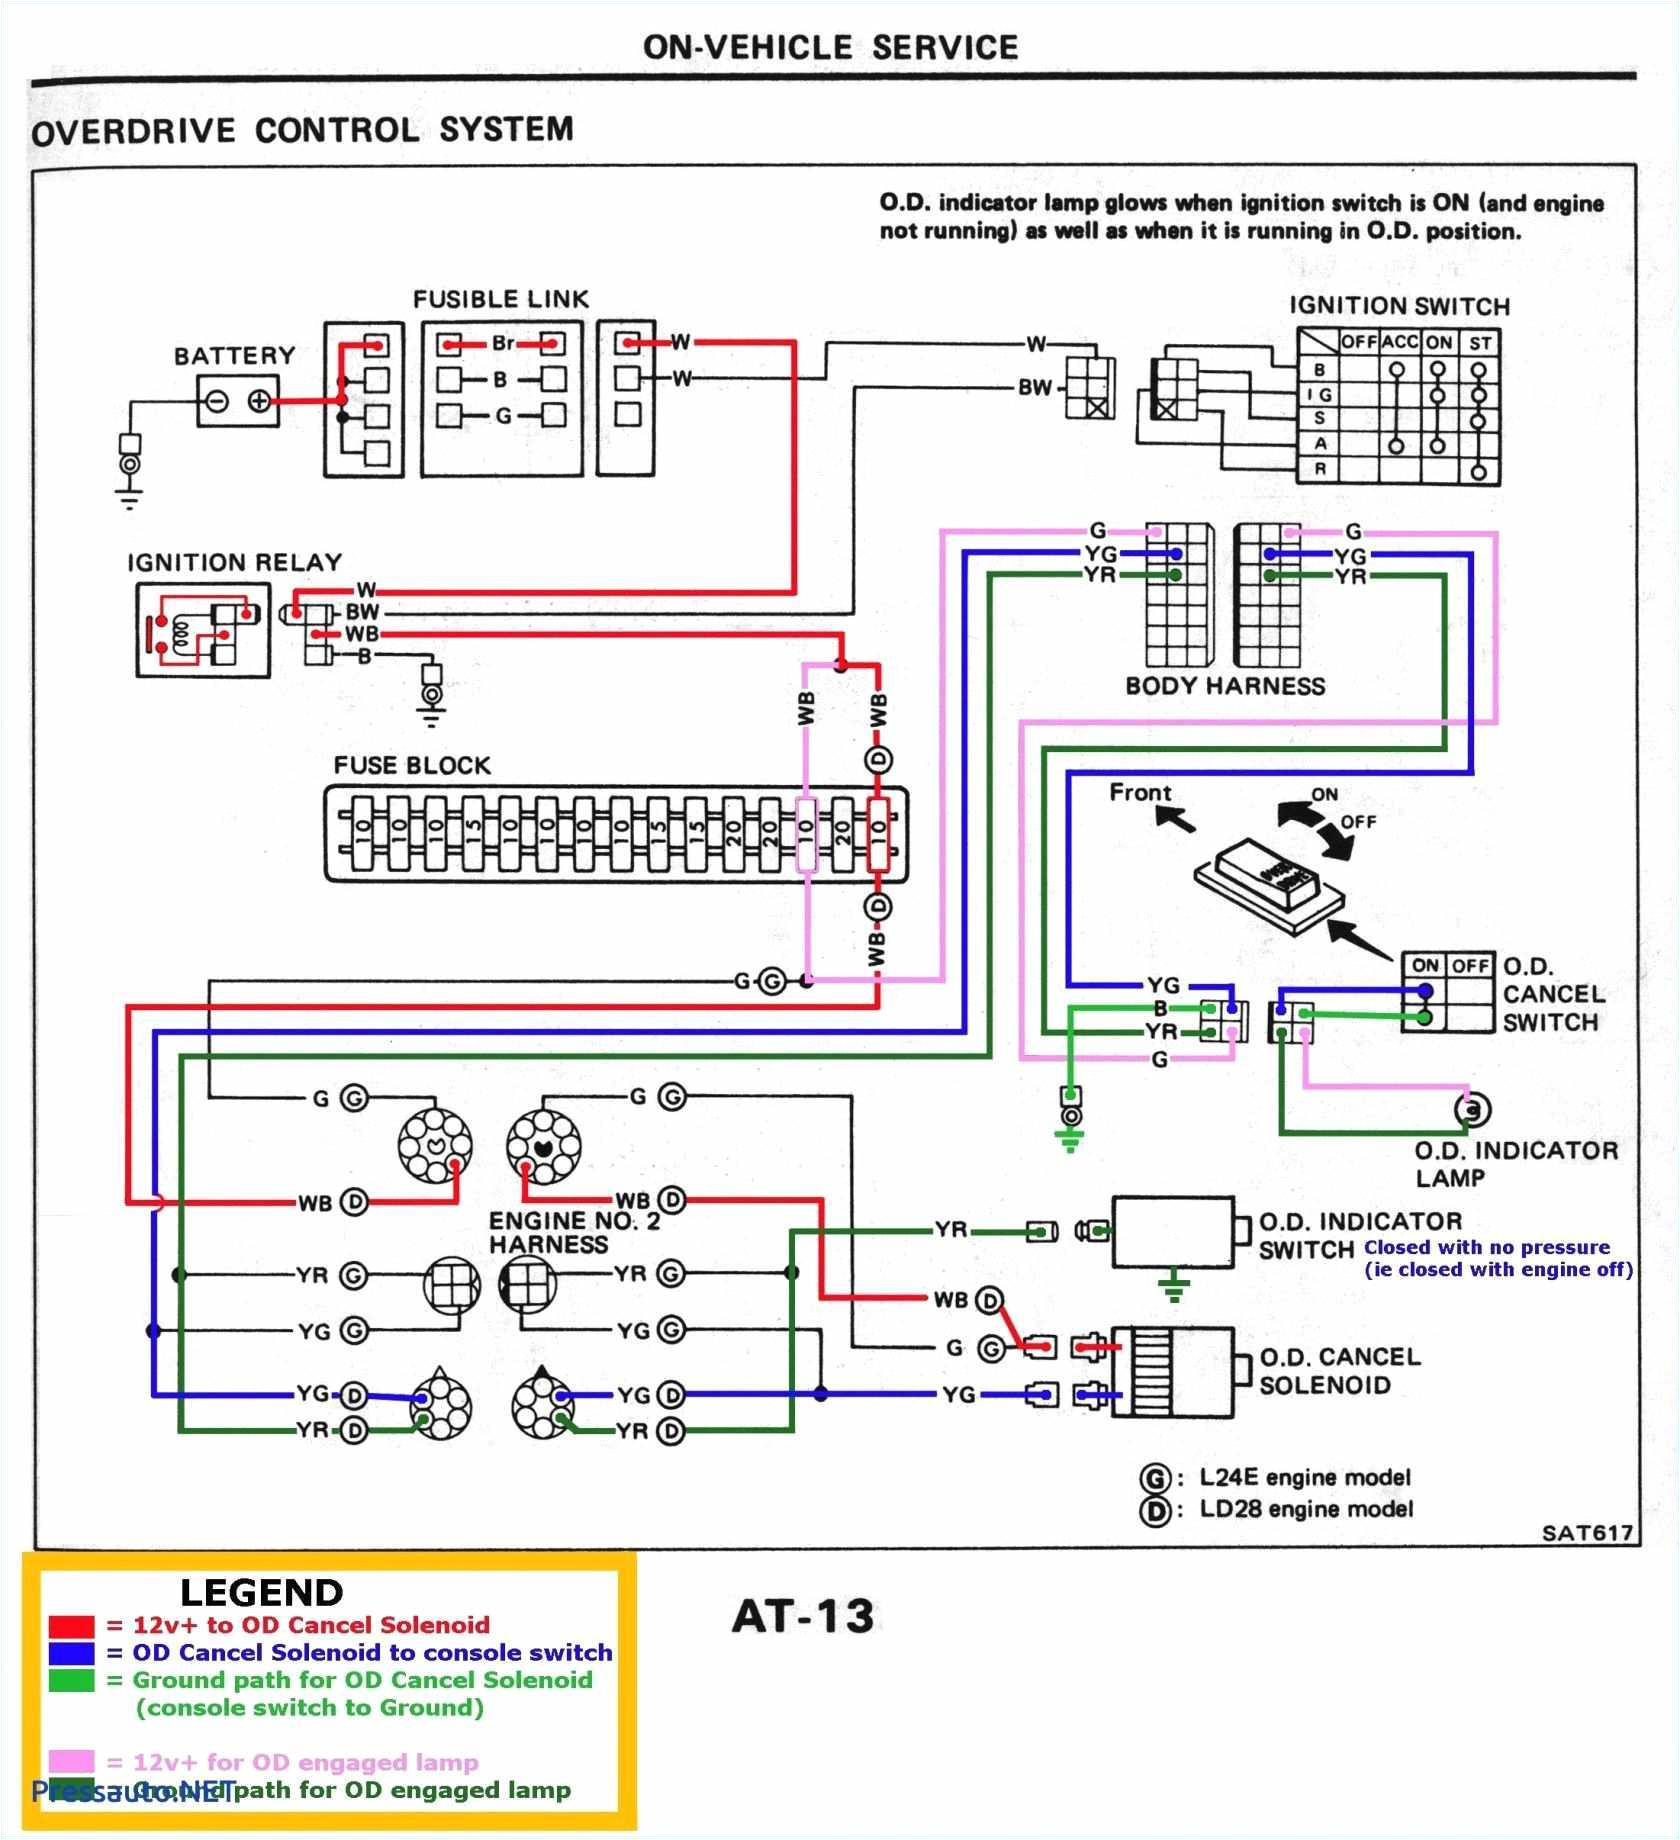 dimming ballast wiring diagram inspirational mark 10 dimming ballast wiring diagram of dimming ballast wiring diagram jpg